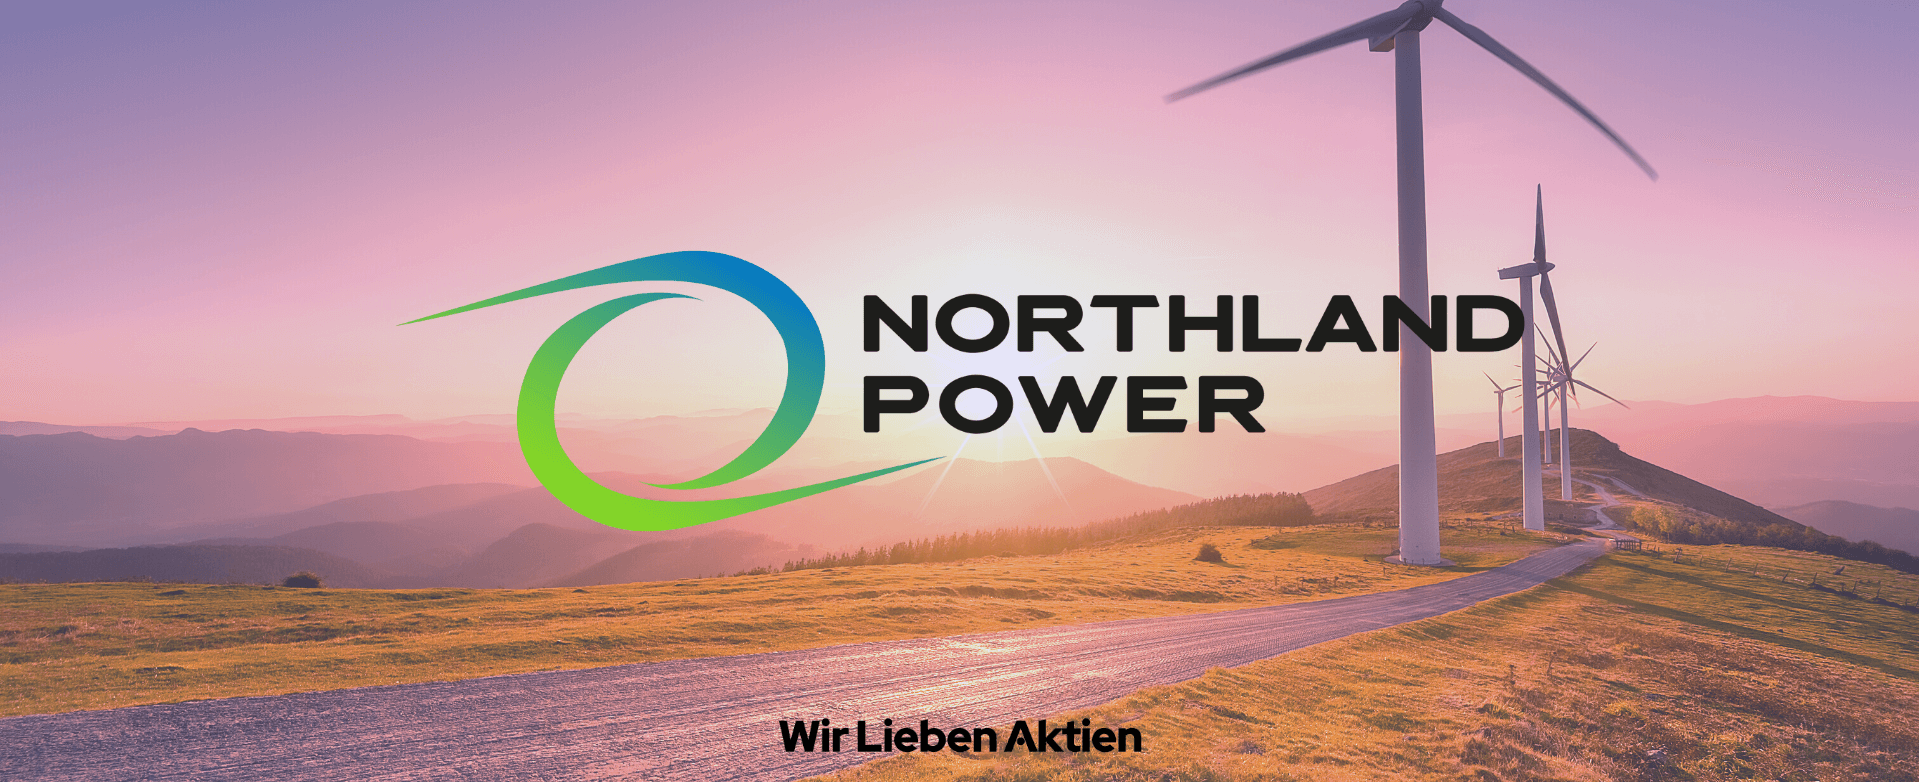 Northland Power Aktie Analyse - Die beste Renewable Energy Aktie?